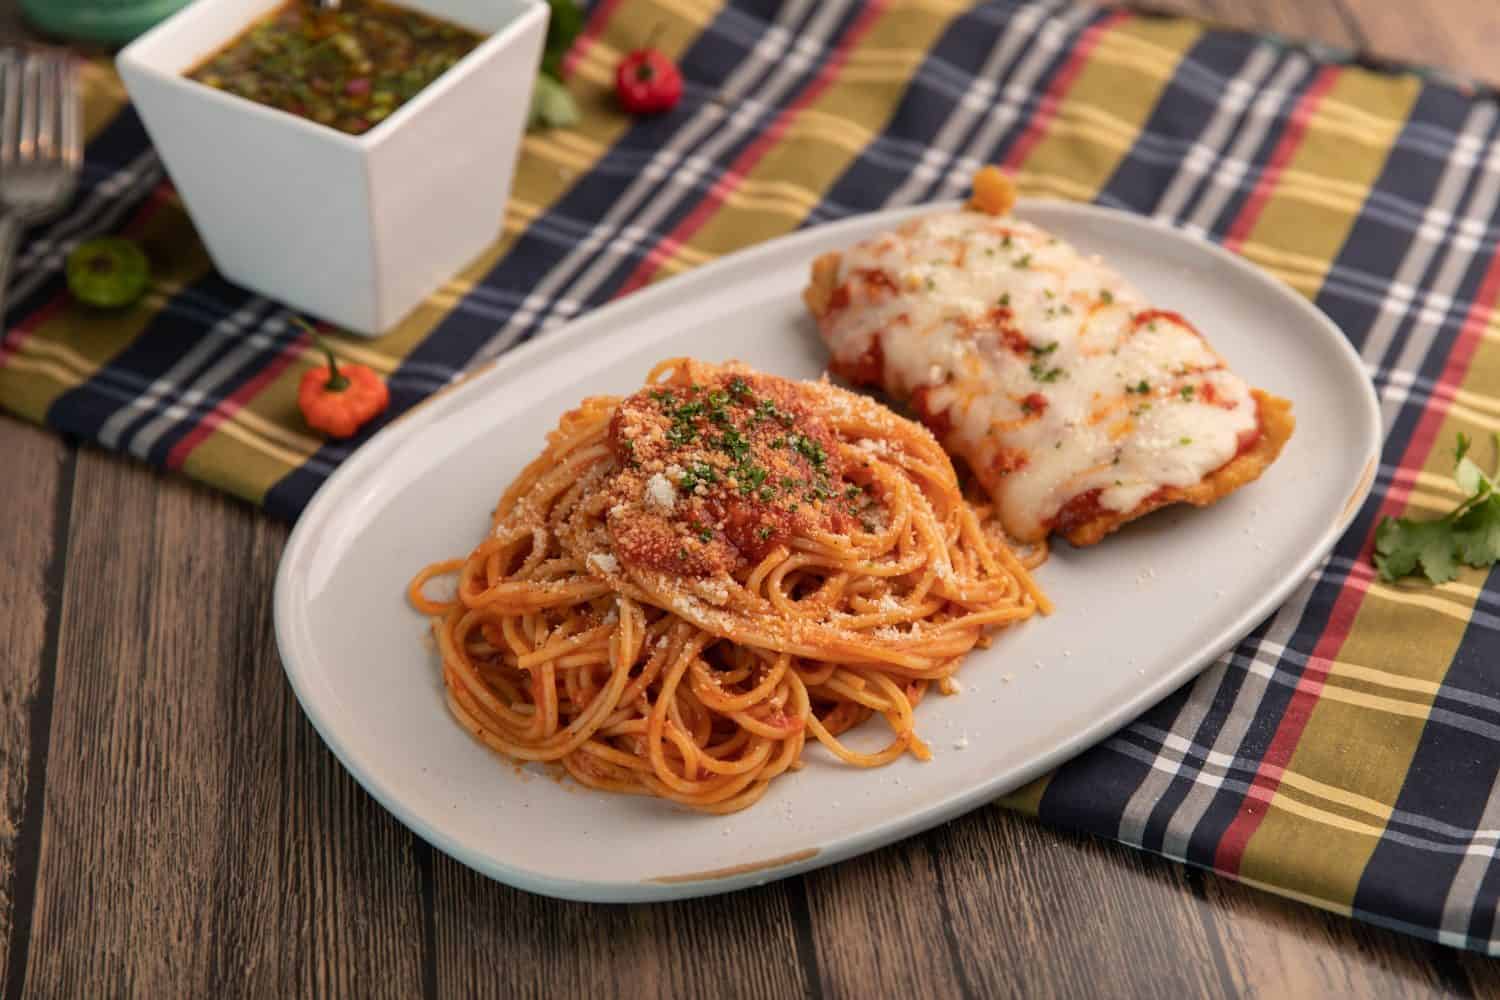 Chicken parmesan with spaghetti and parsley garnish